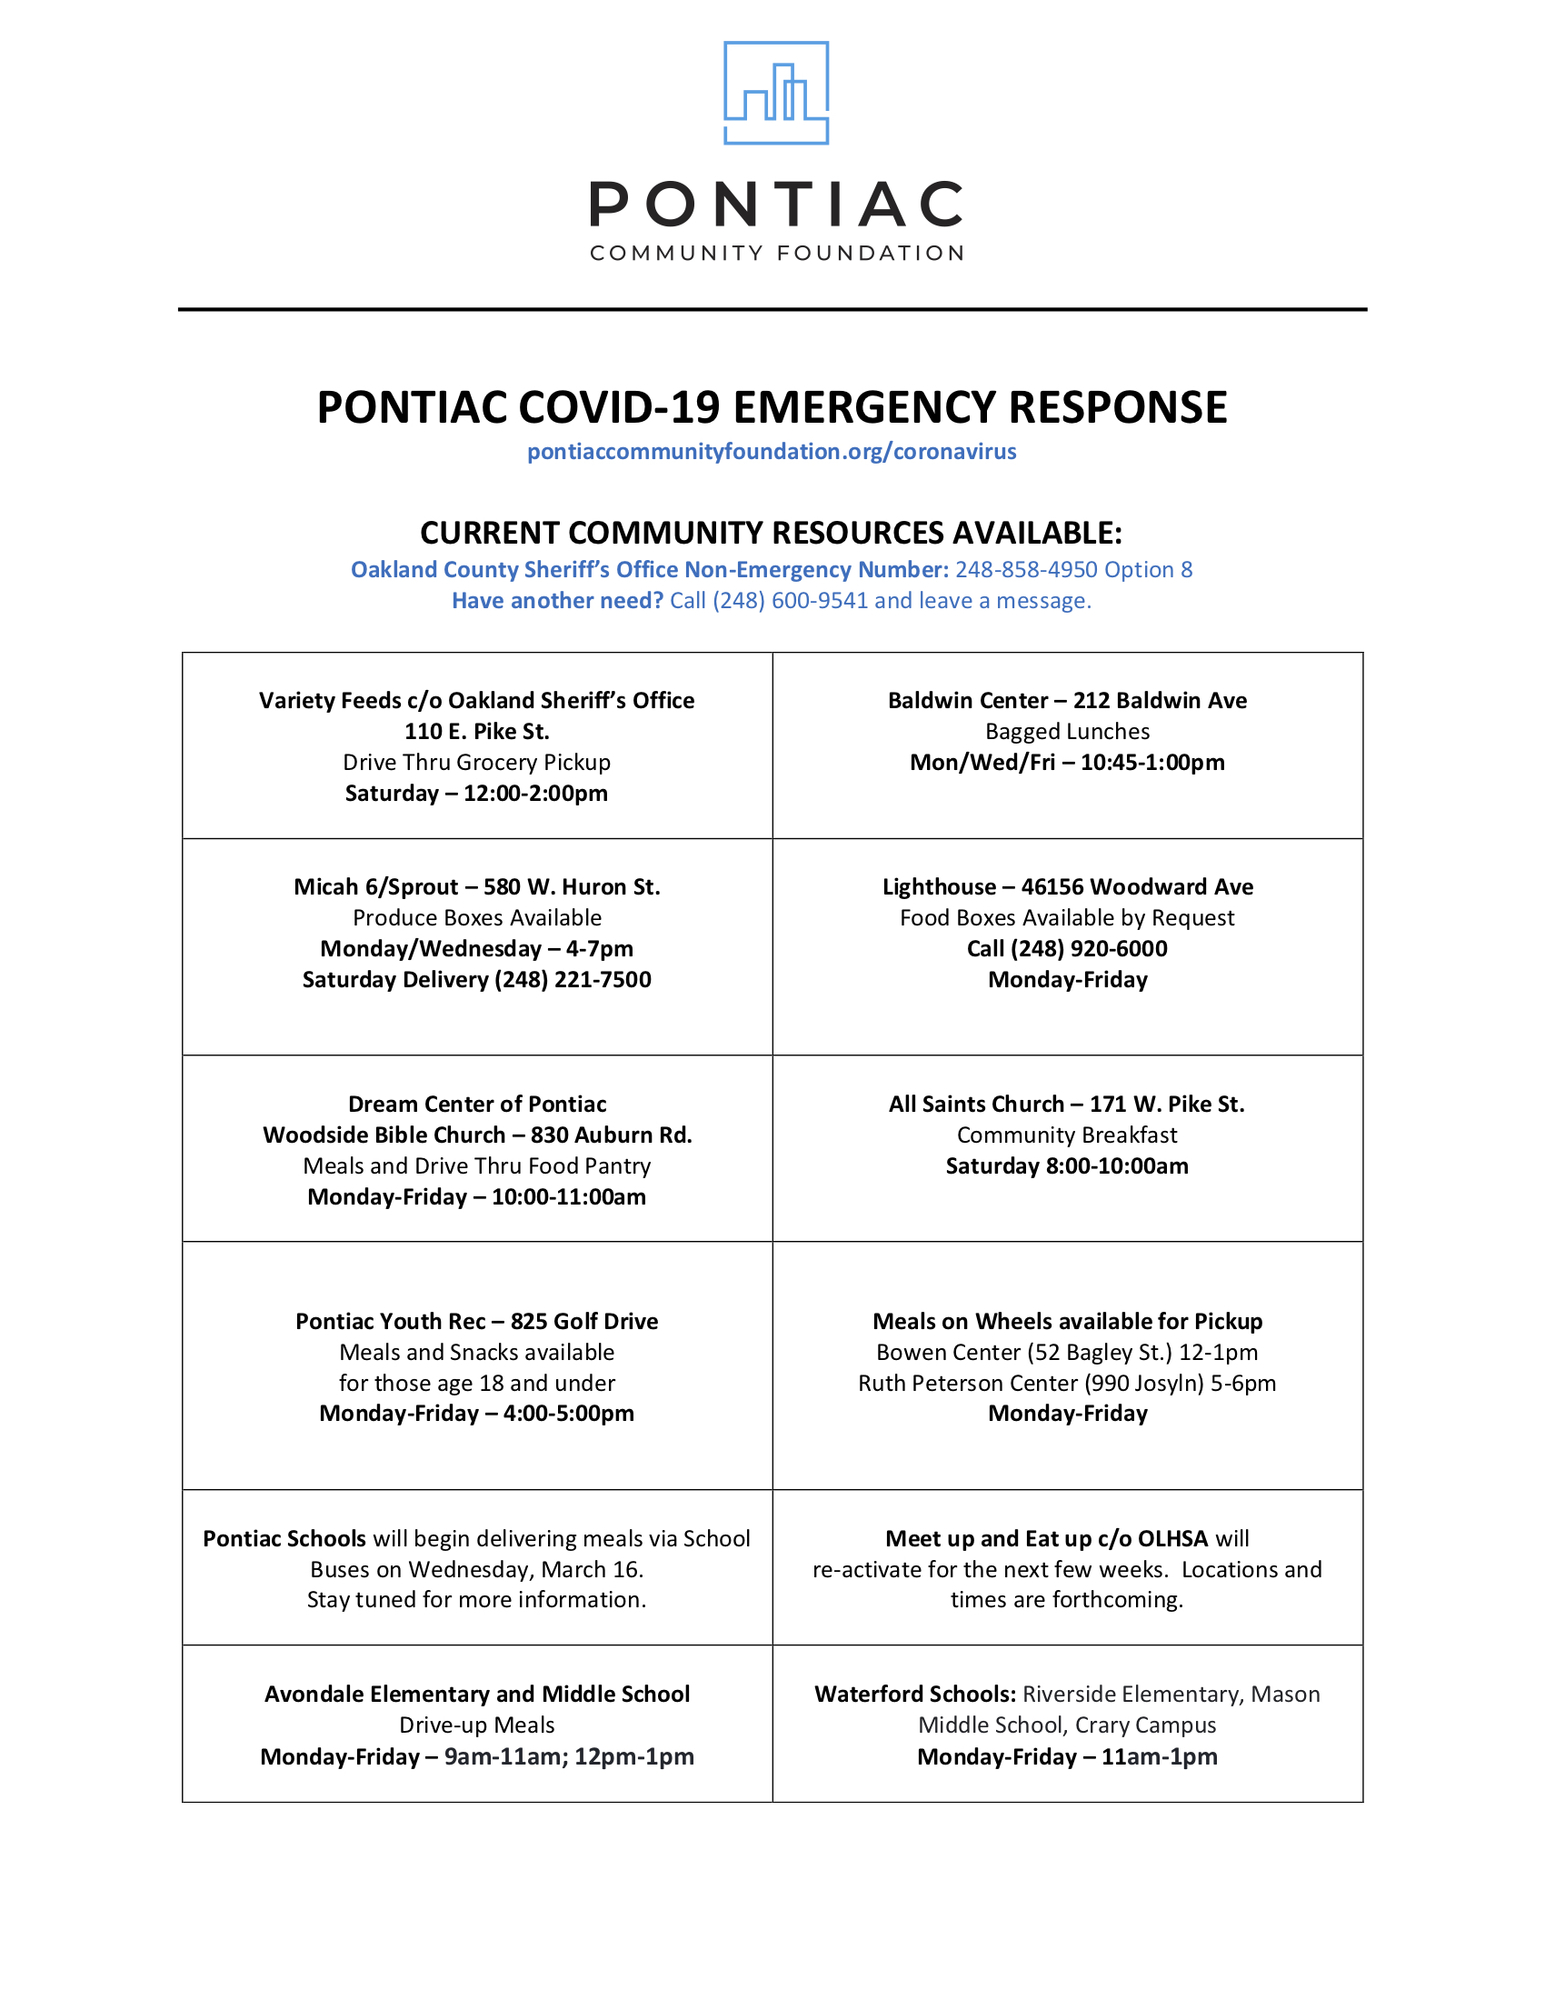 COVID-19 Pontiac Resources